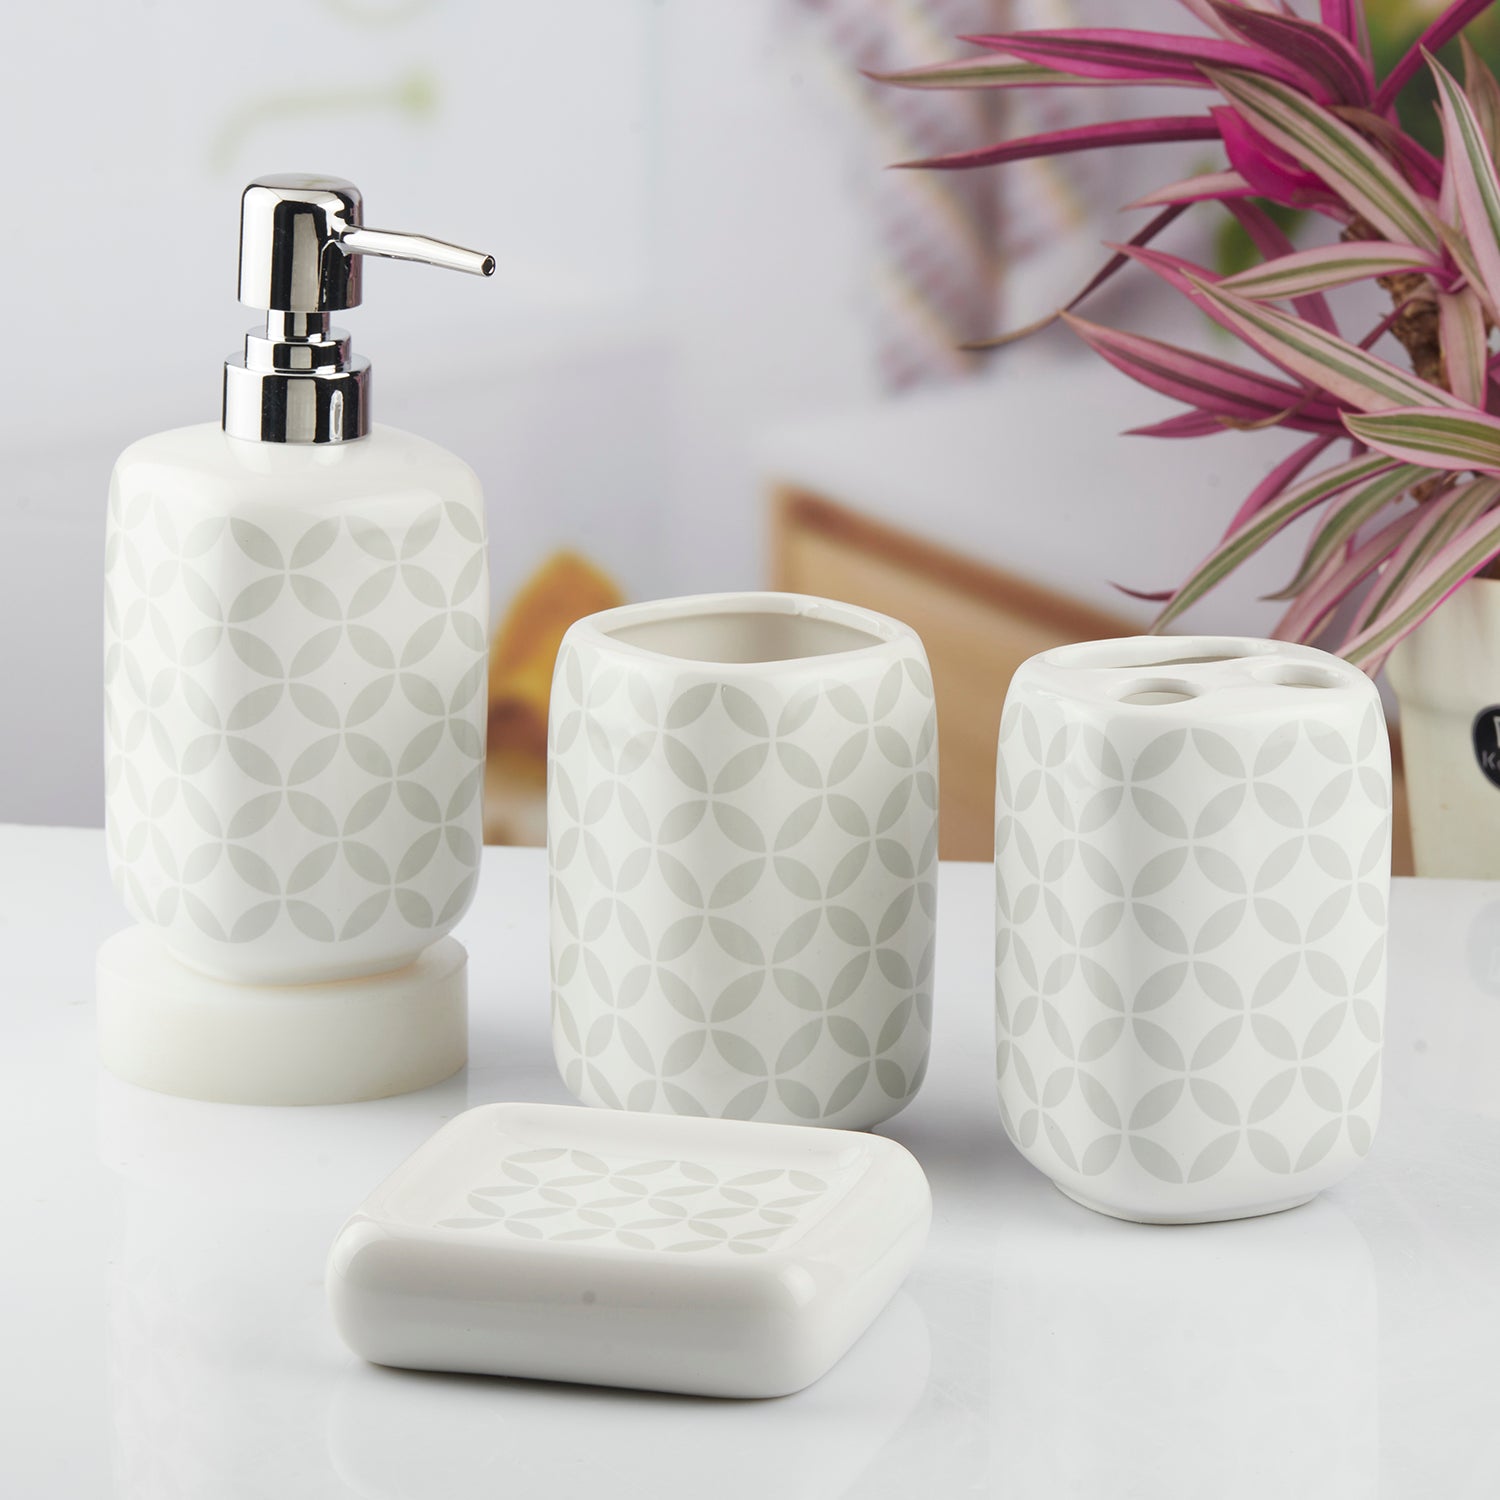 Ceramic Bathroom Set of 4 with Soap Dispenser (10453)